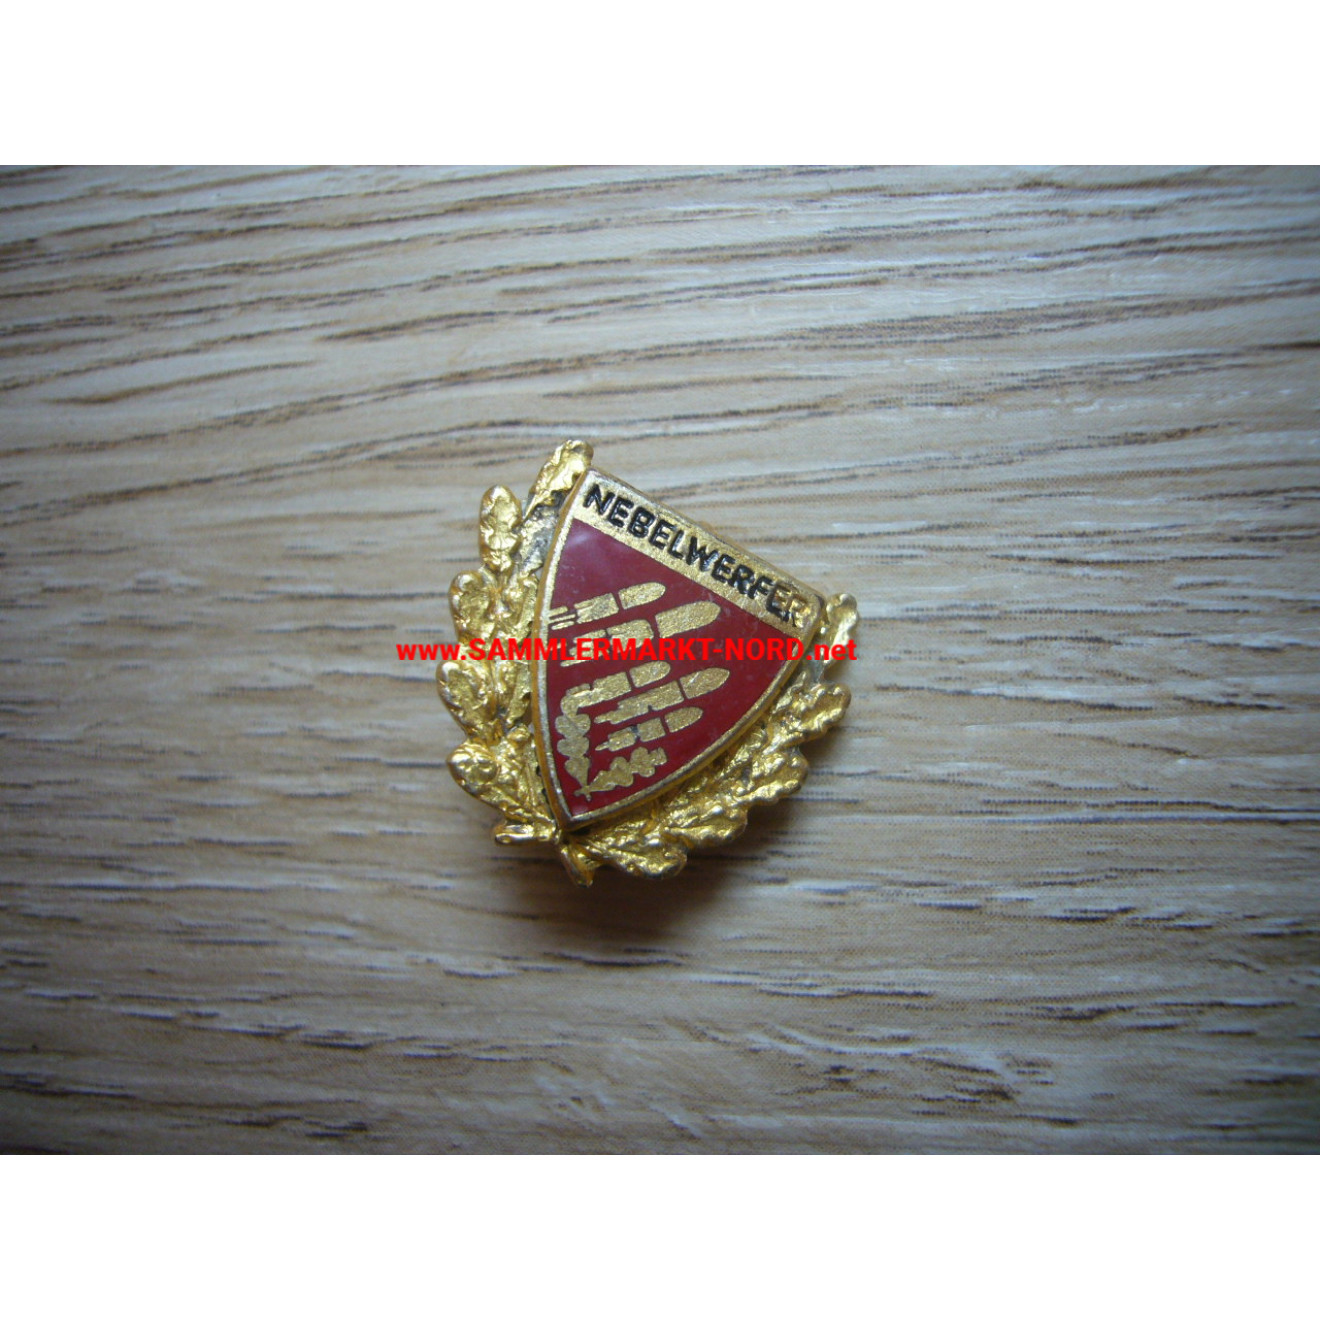 Comradeship of the Fog Launcher Troop (Nebelwerfer) - Golden Badge of Honour